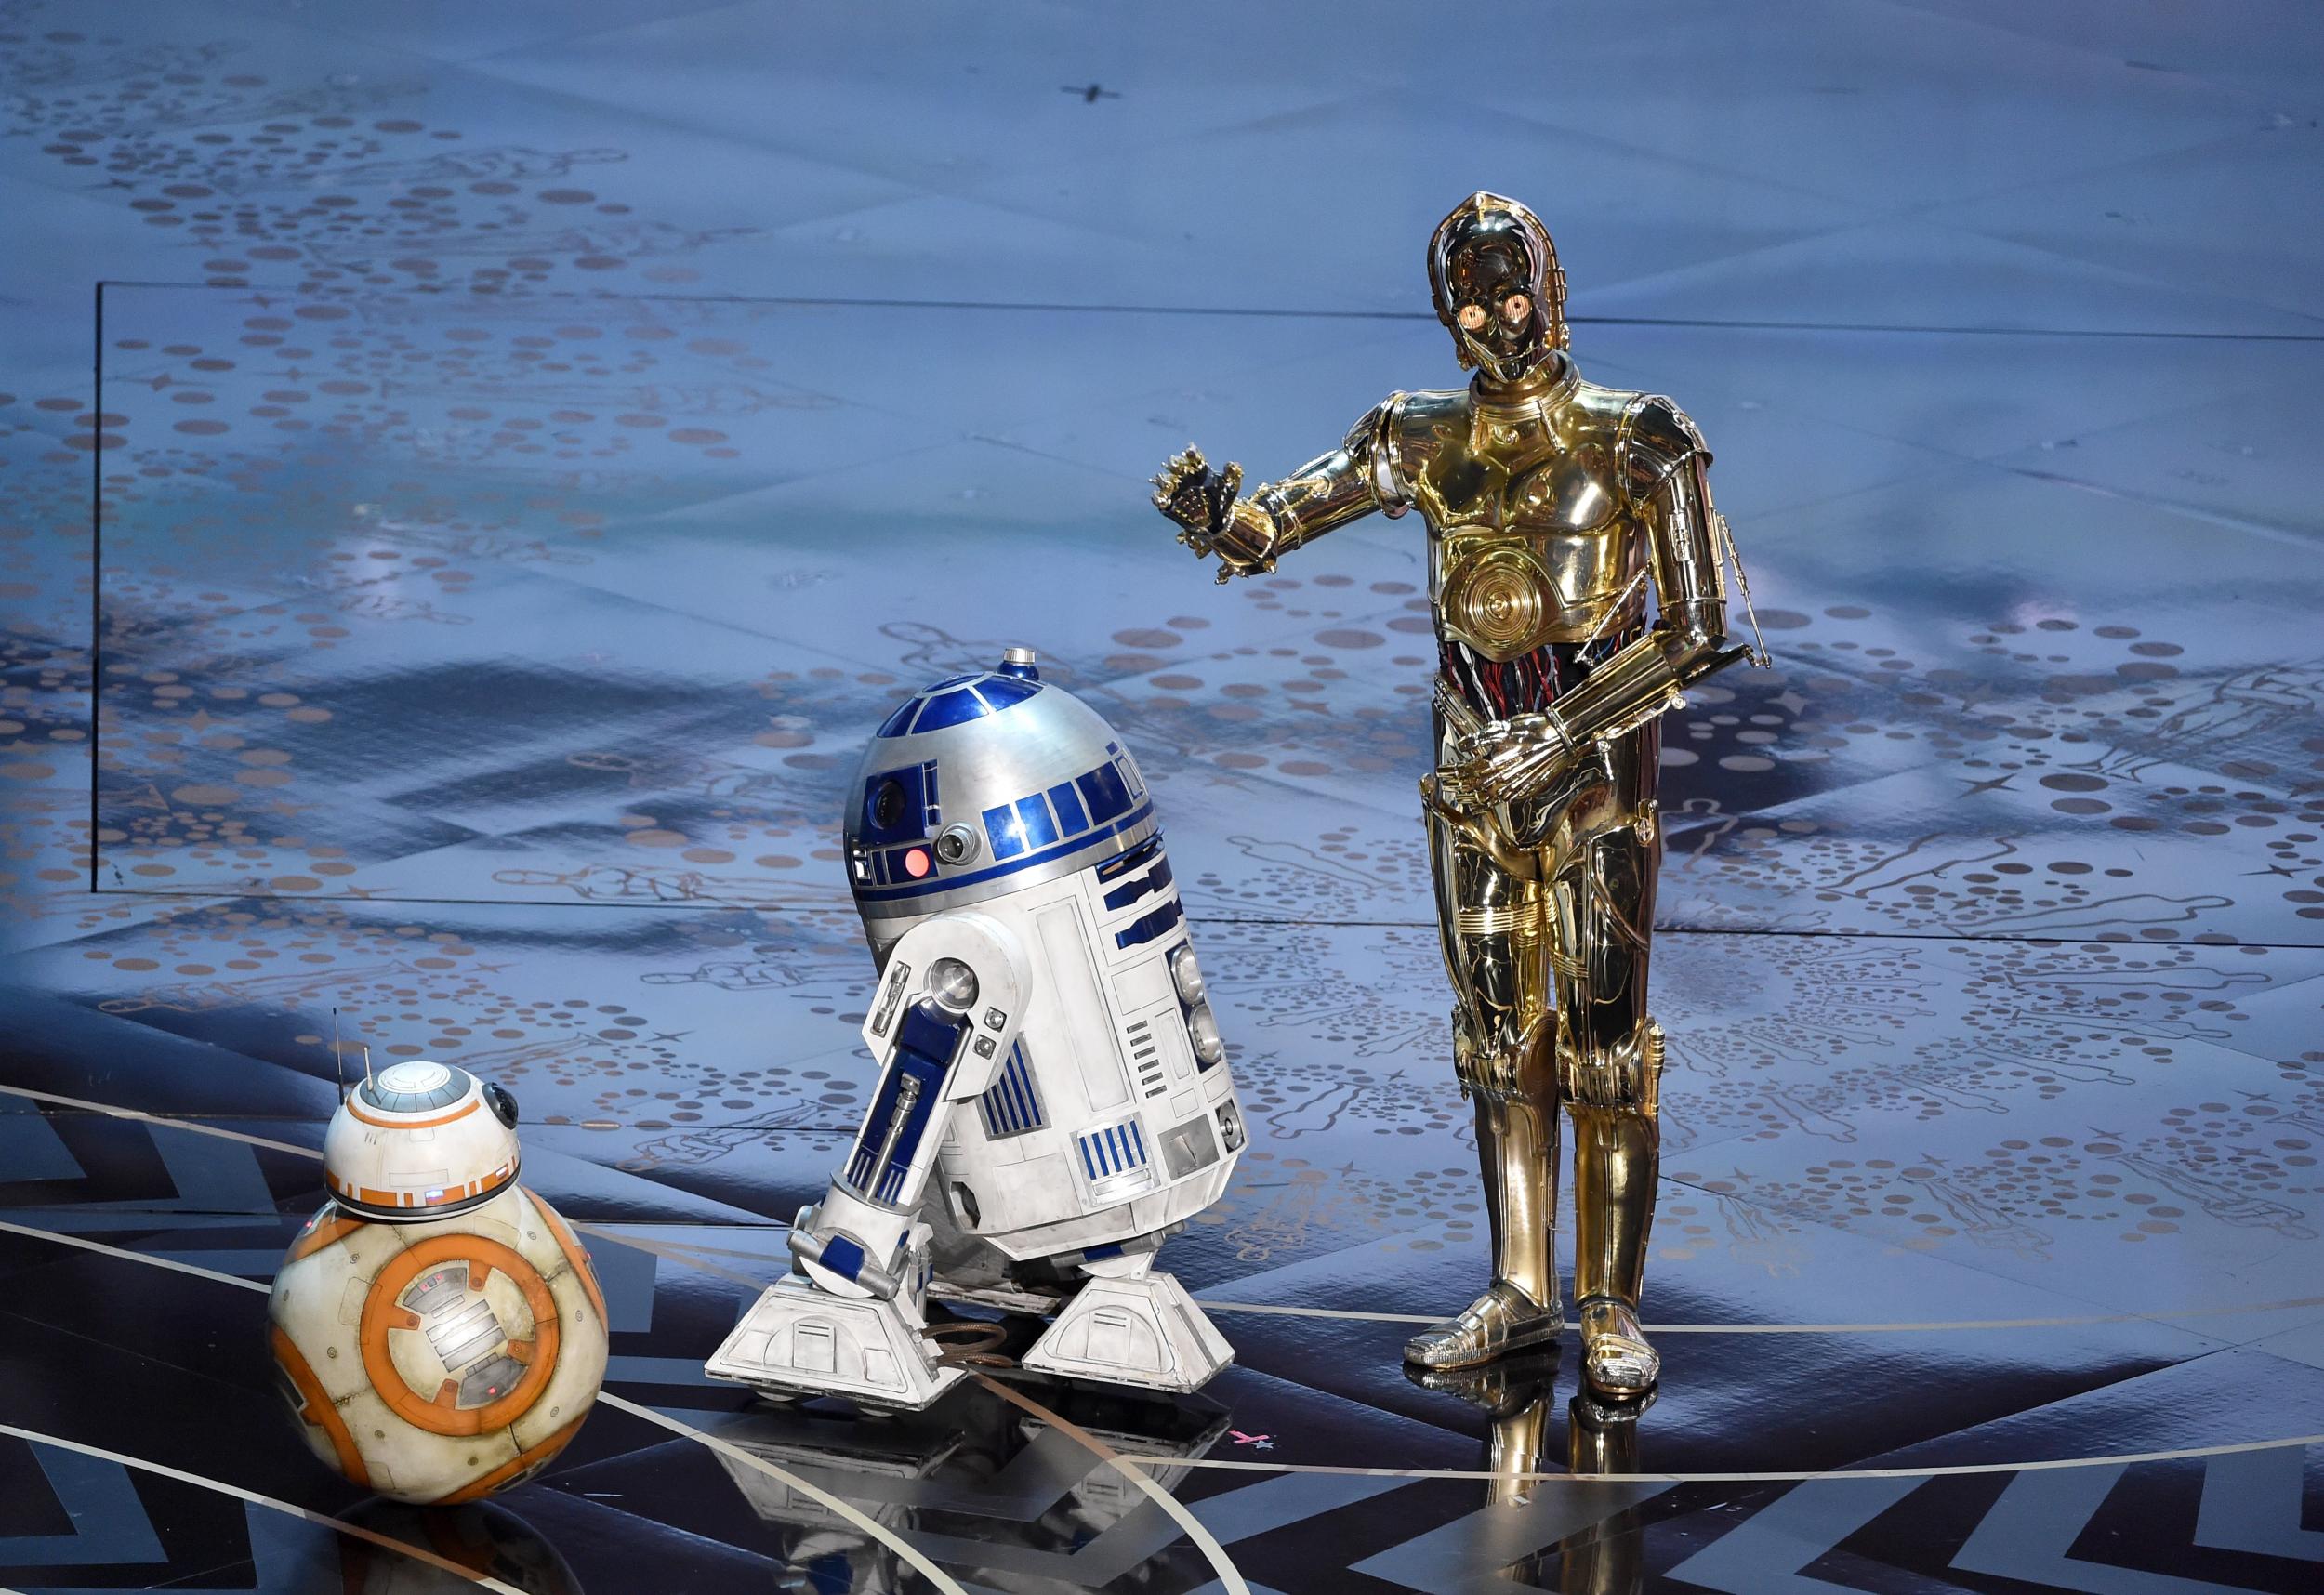 The Star Wars droids crash The Oscars